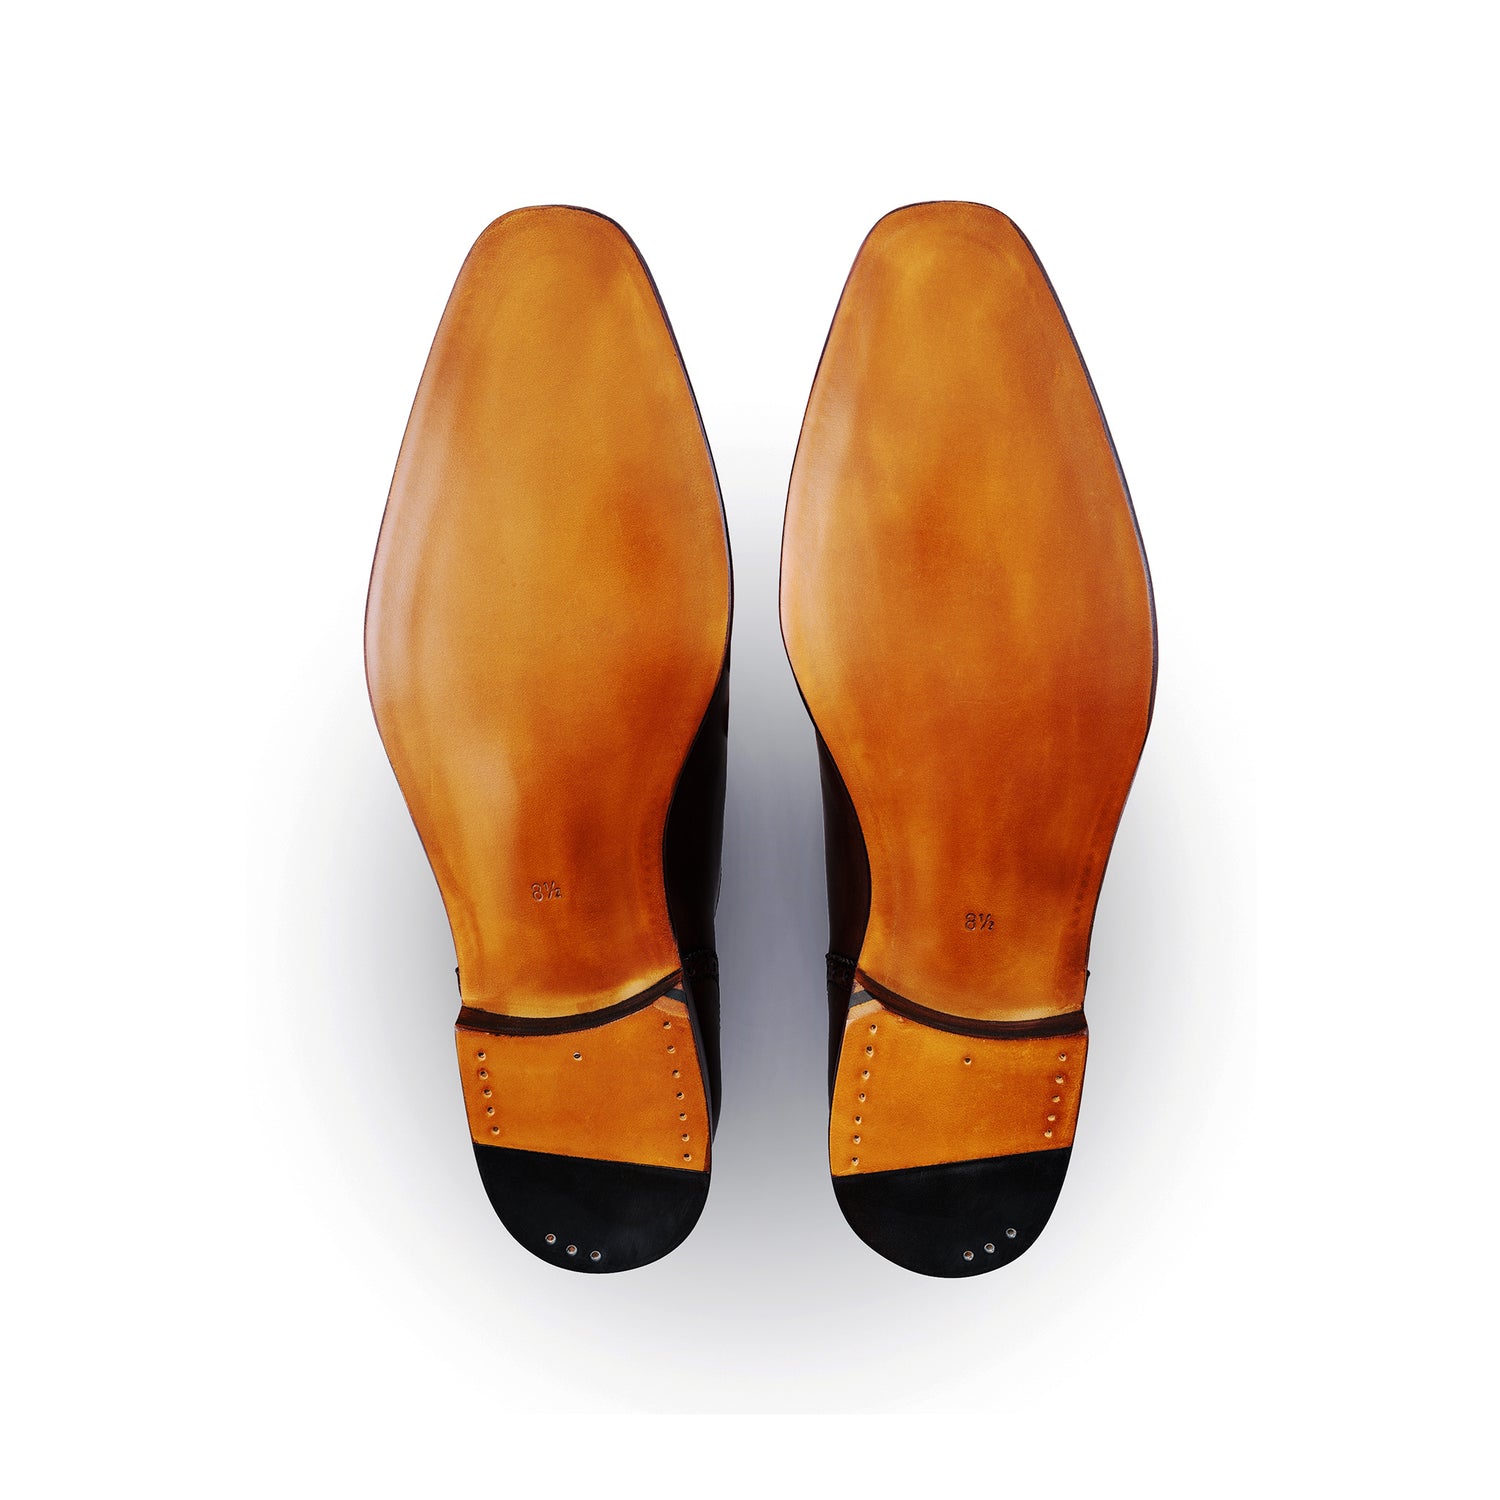 TLB Mallorca leather shoes 506 / ALAN / VEGANO CUERO